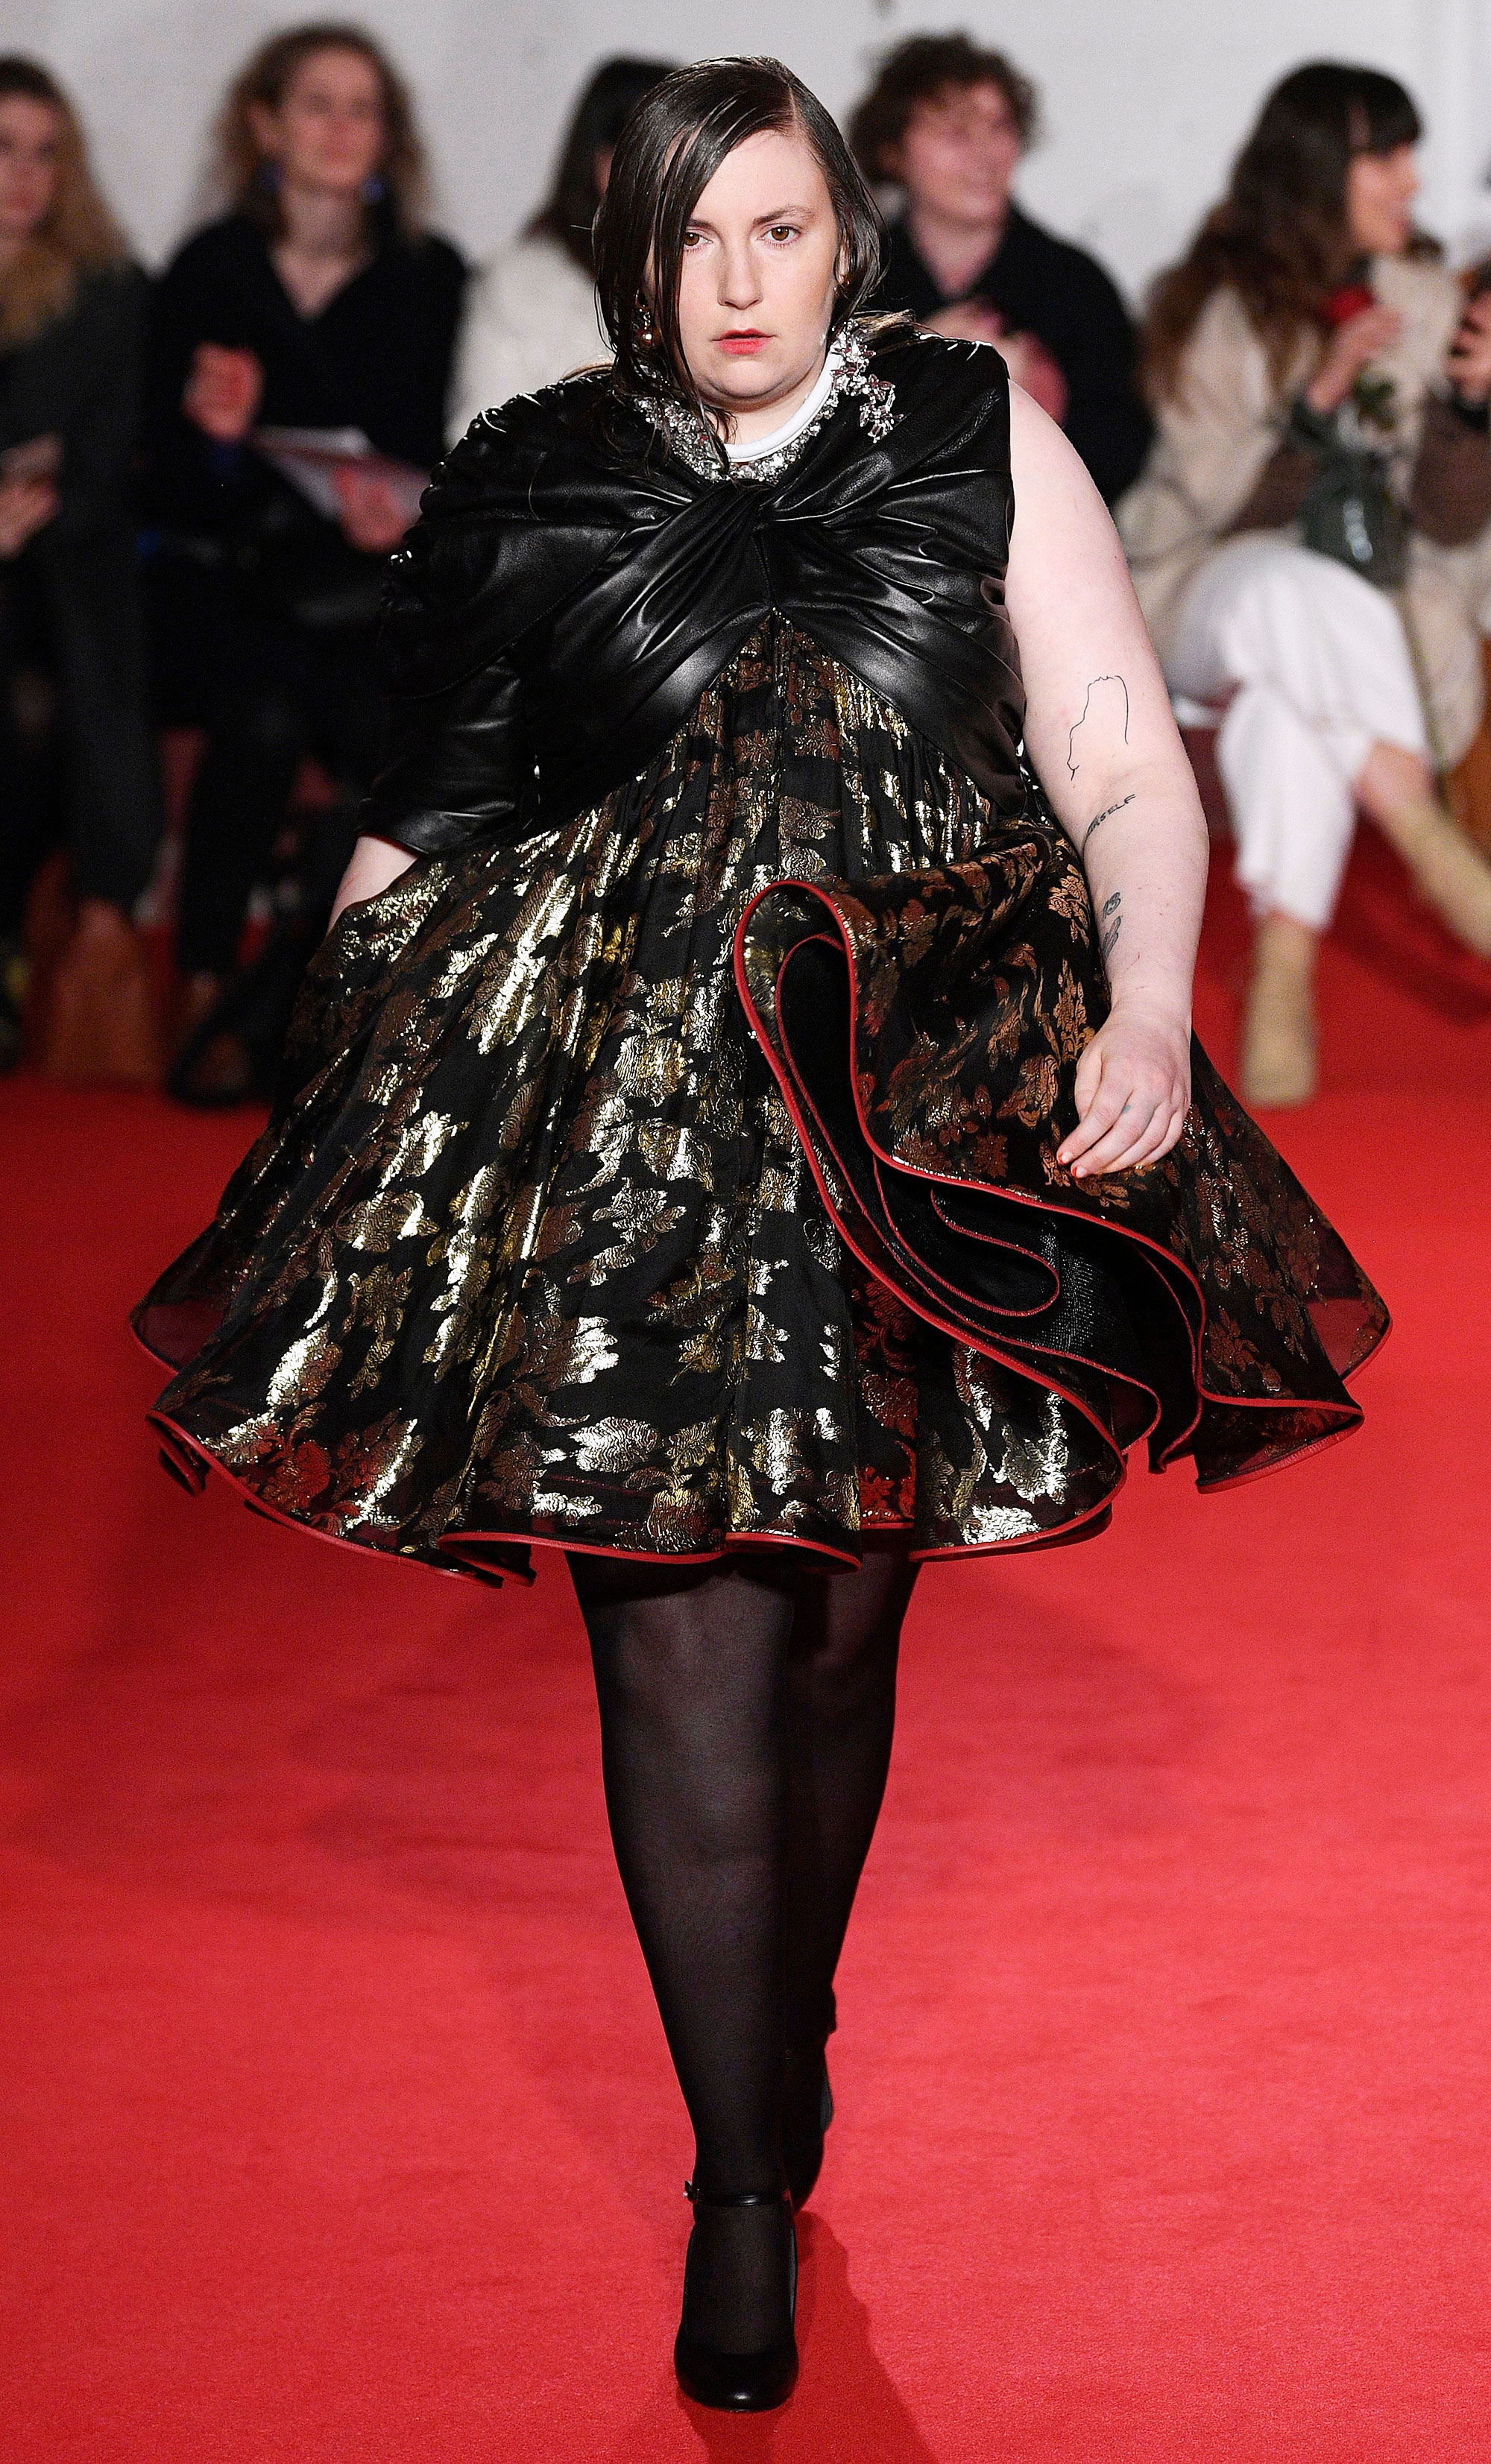 Lena Dunham Makes Runway Debut During London Fashion Week